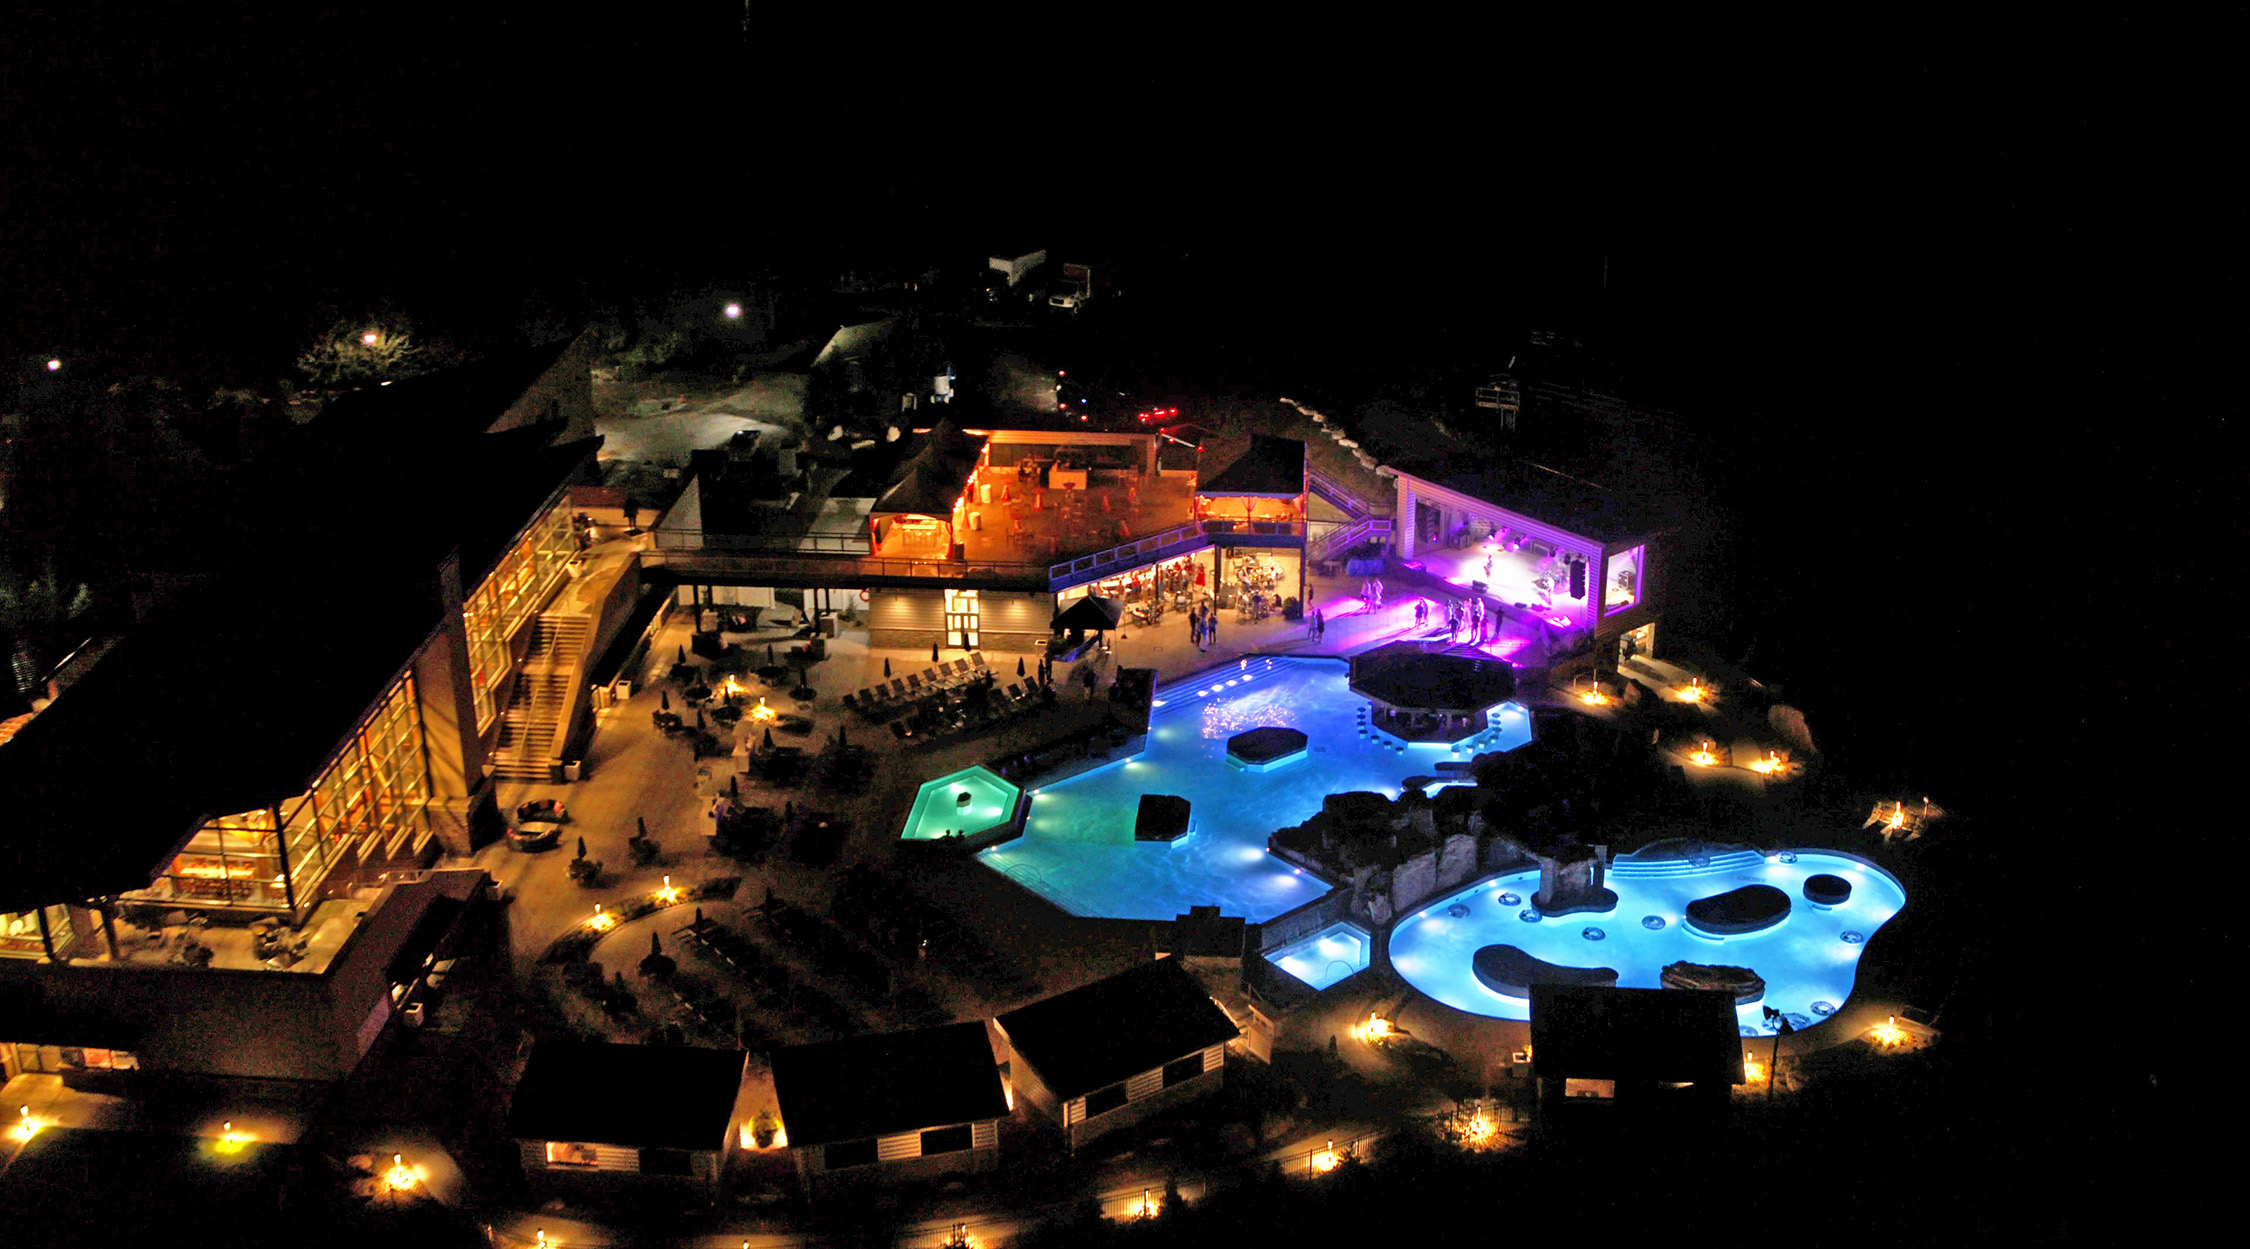 A pool complex glows at night